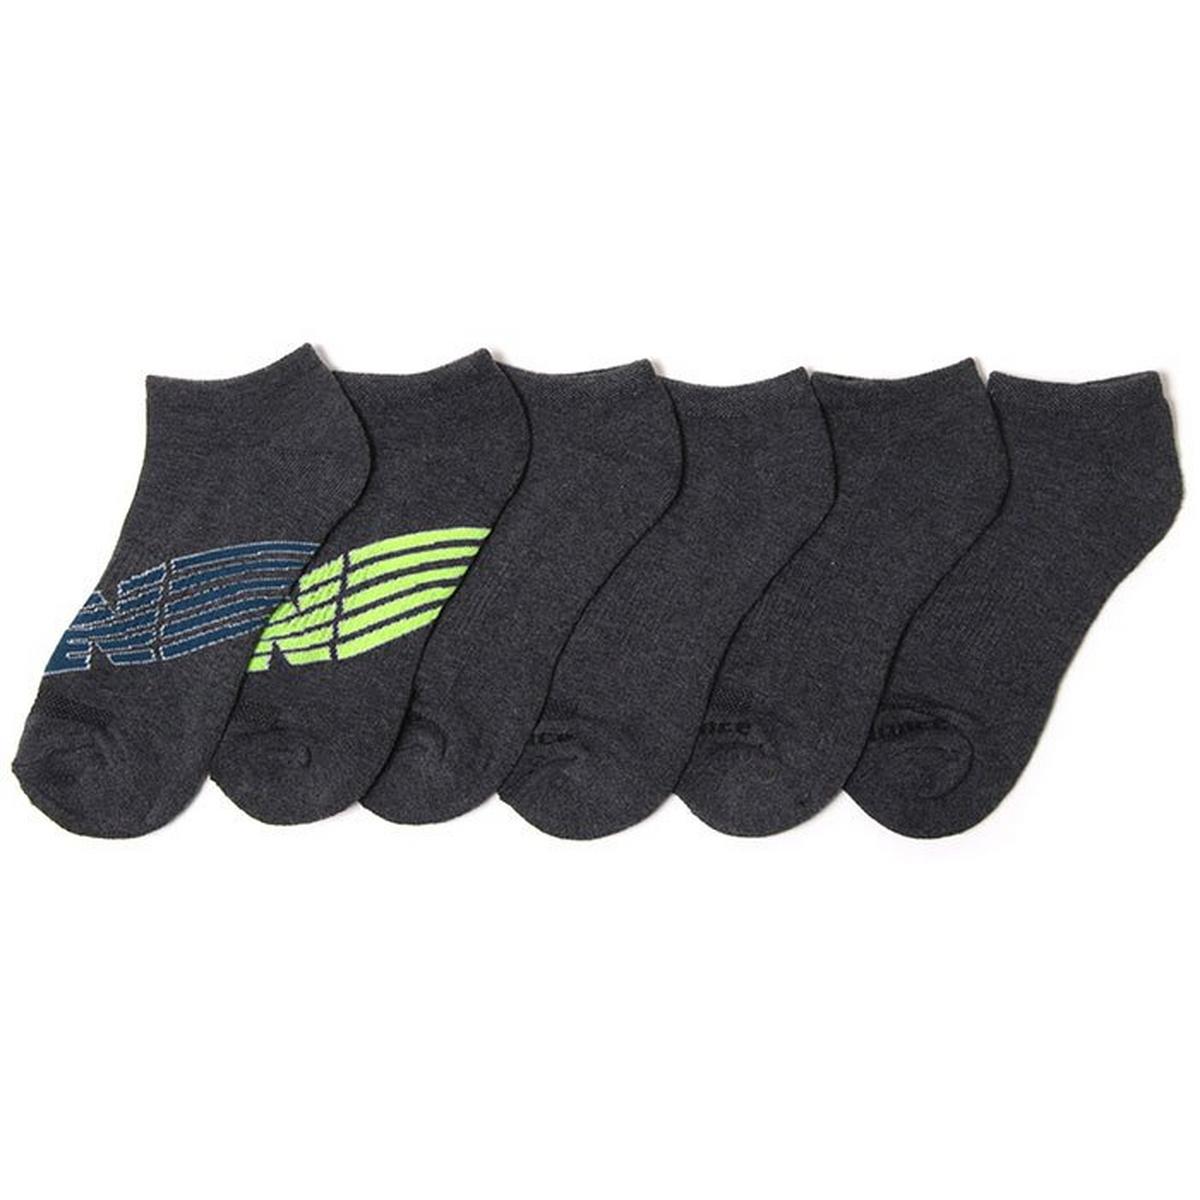 Unisex Active Cushion Low Cut Sock (6 Pack)